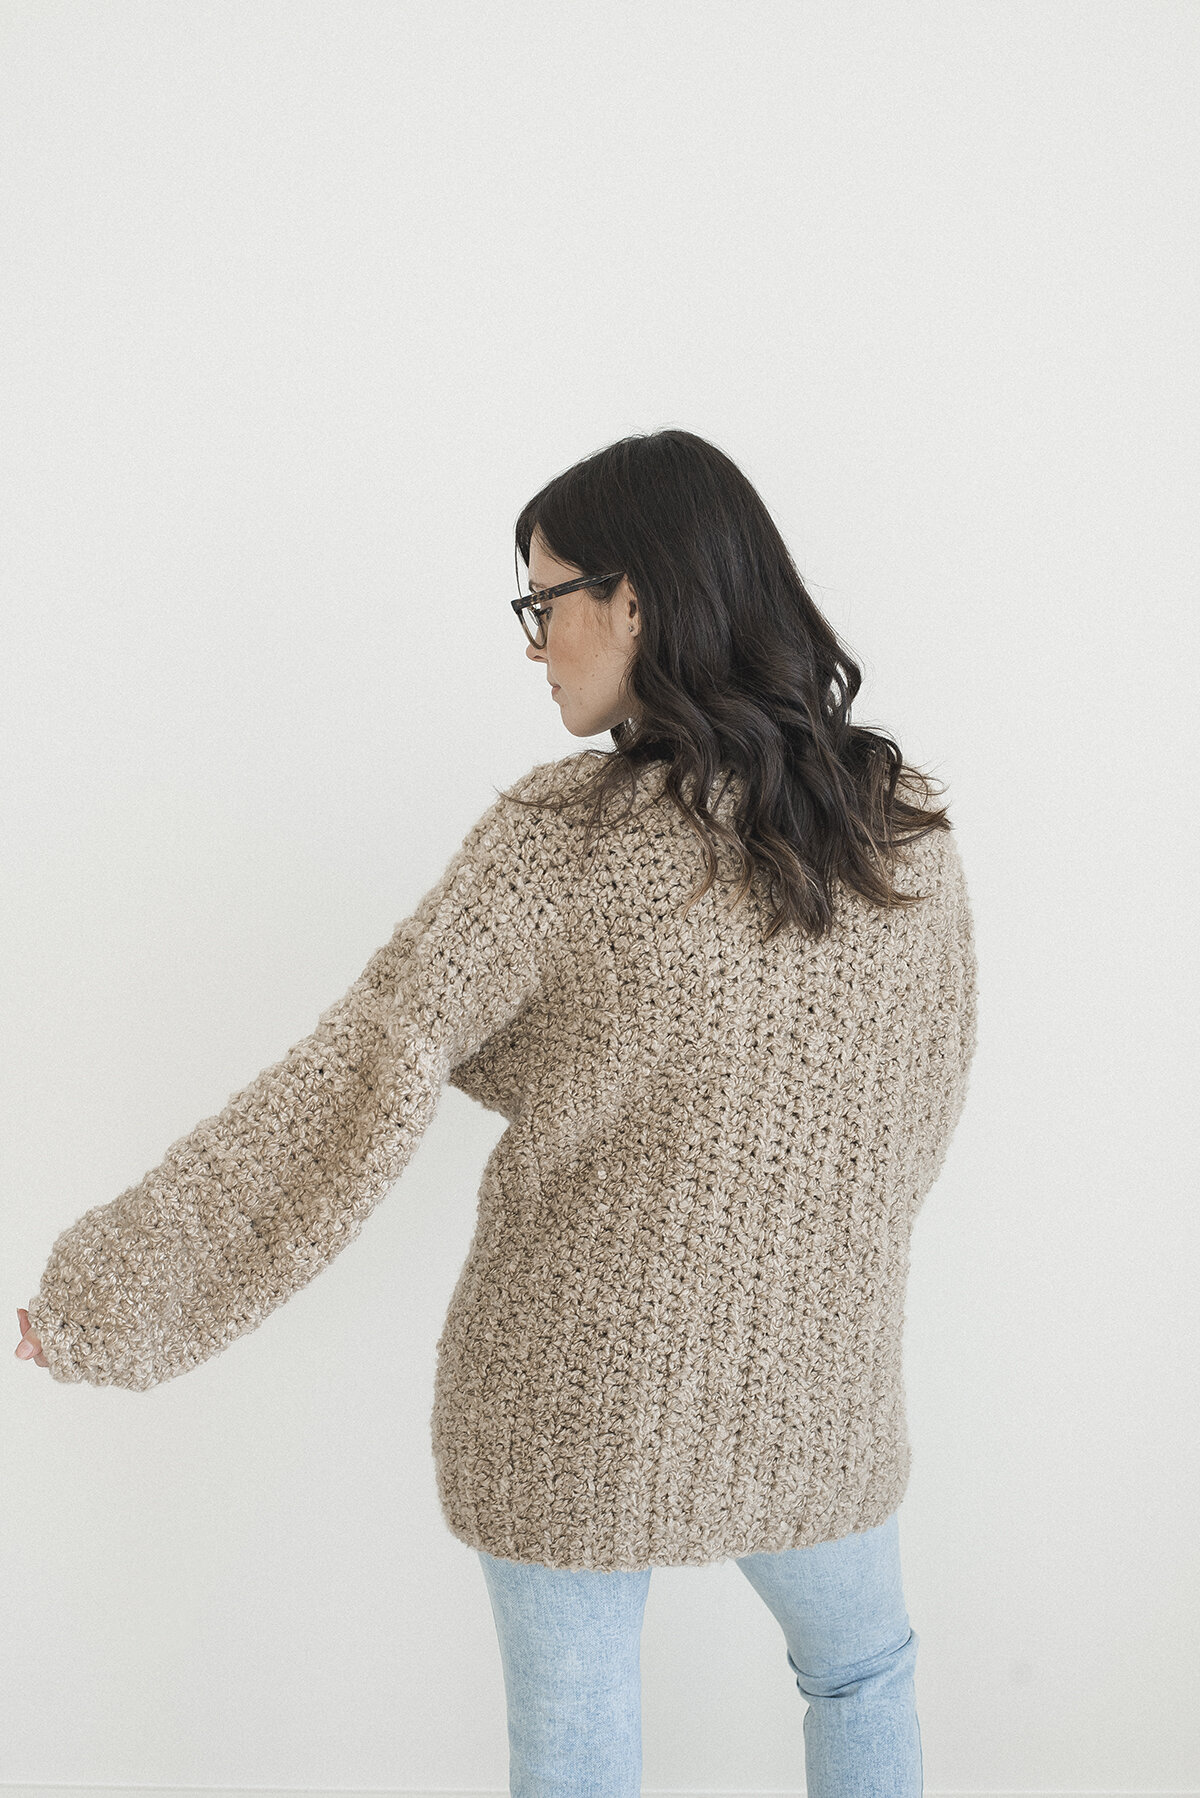 Morning Coffee Coatigan - Free Crochet Pattern — Megmade with Love